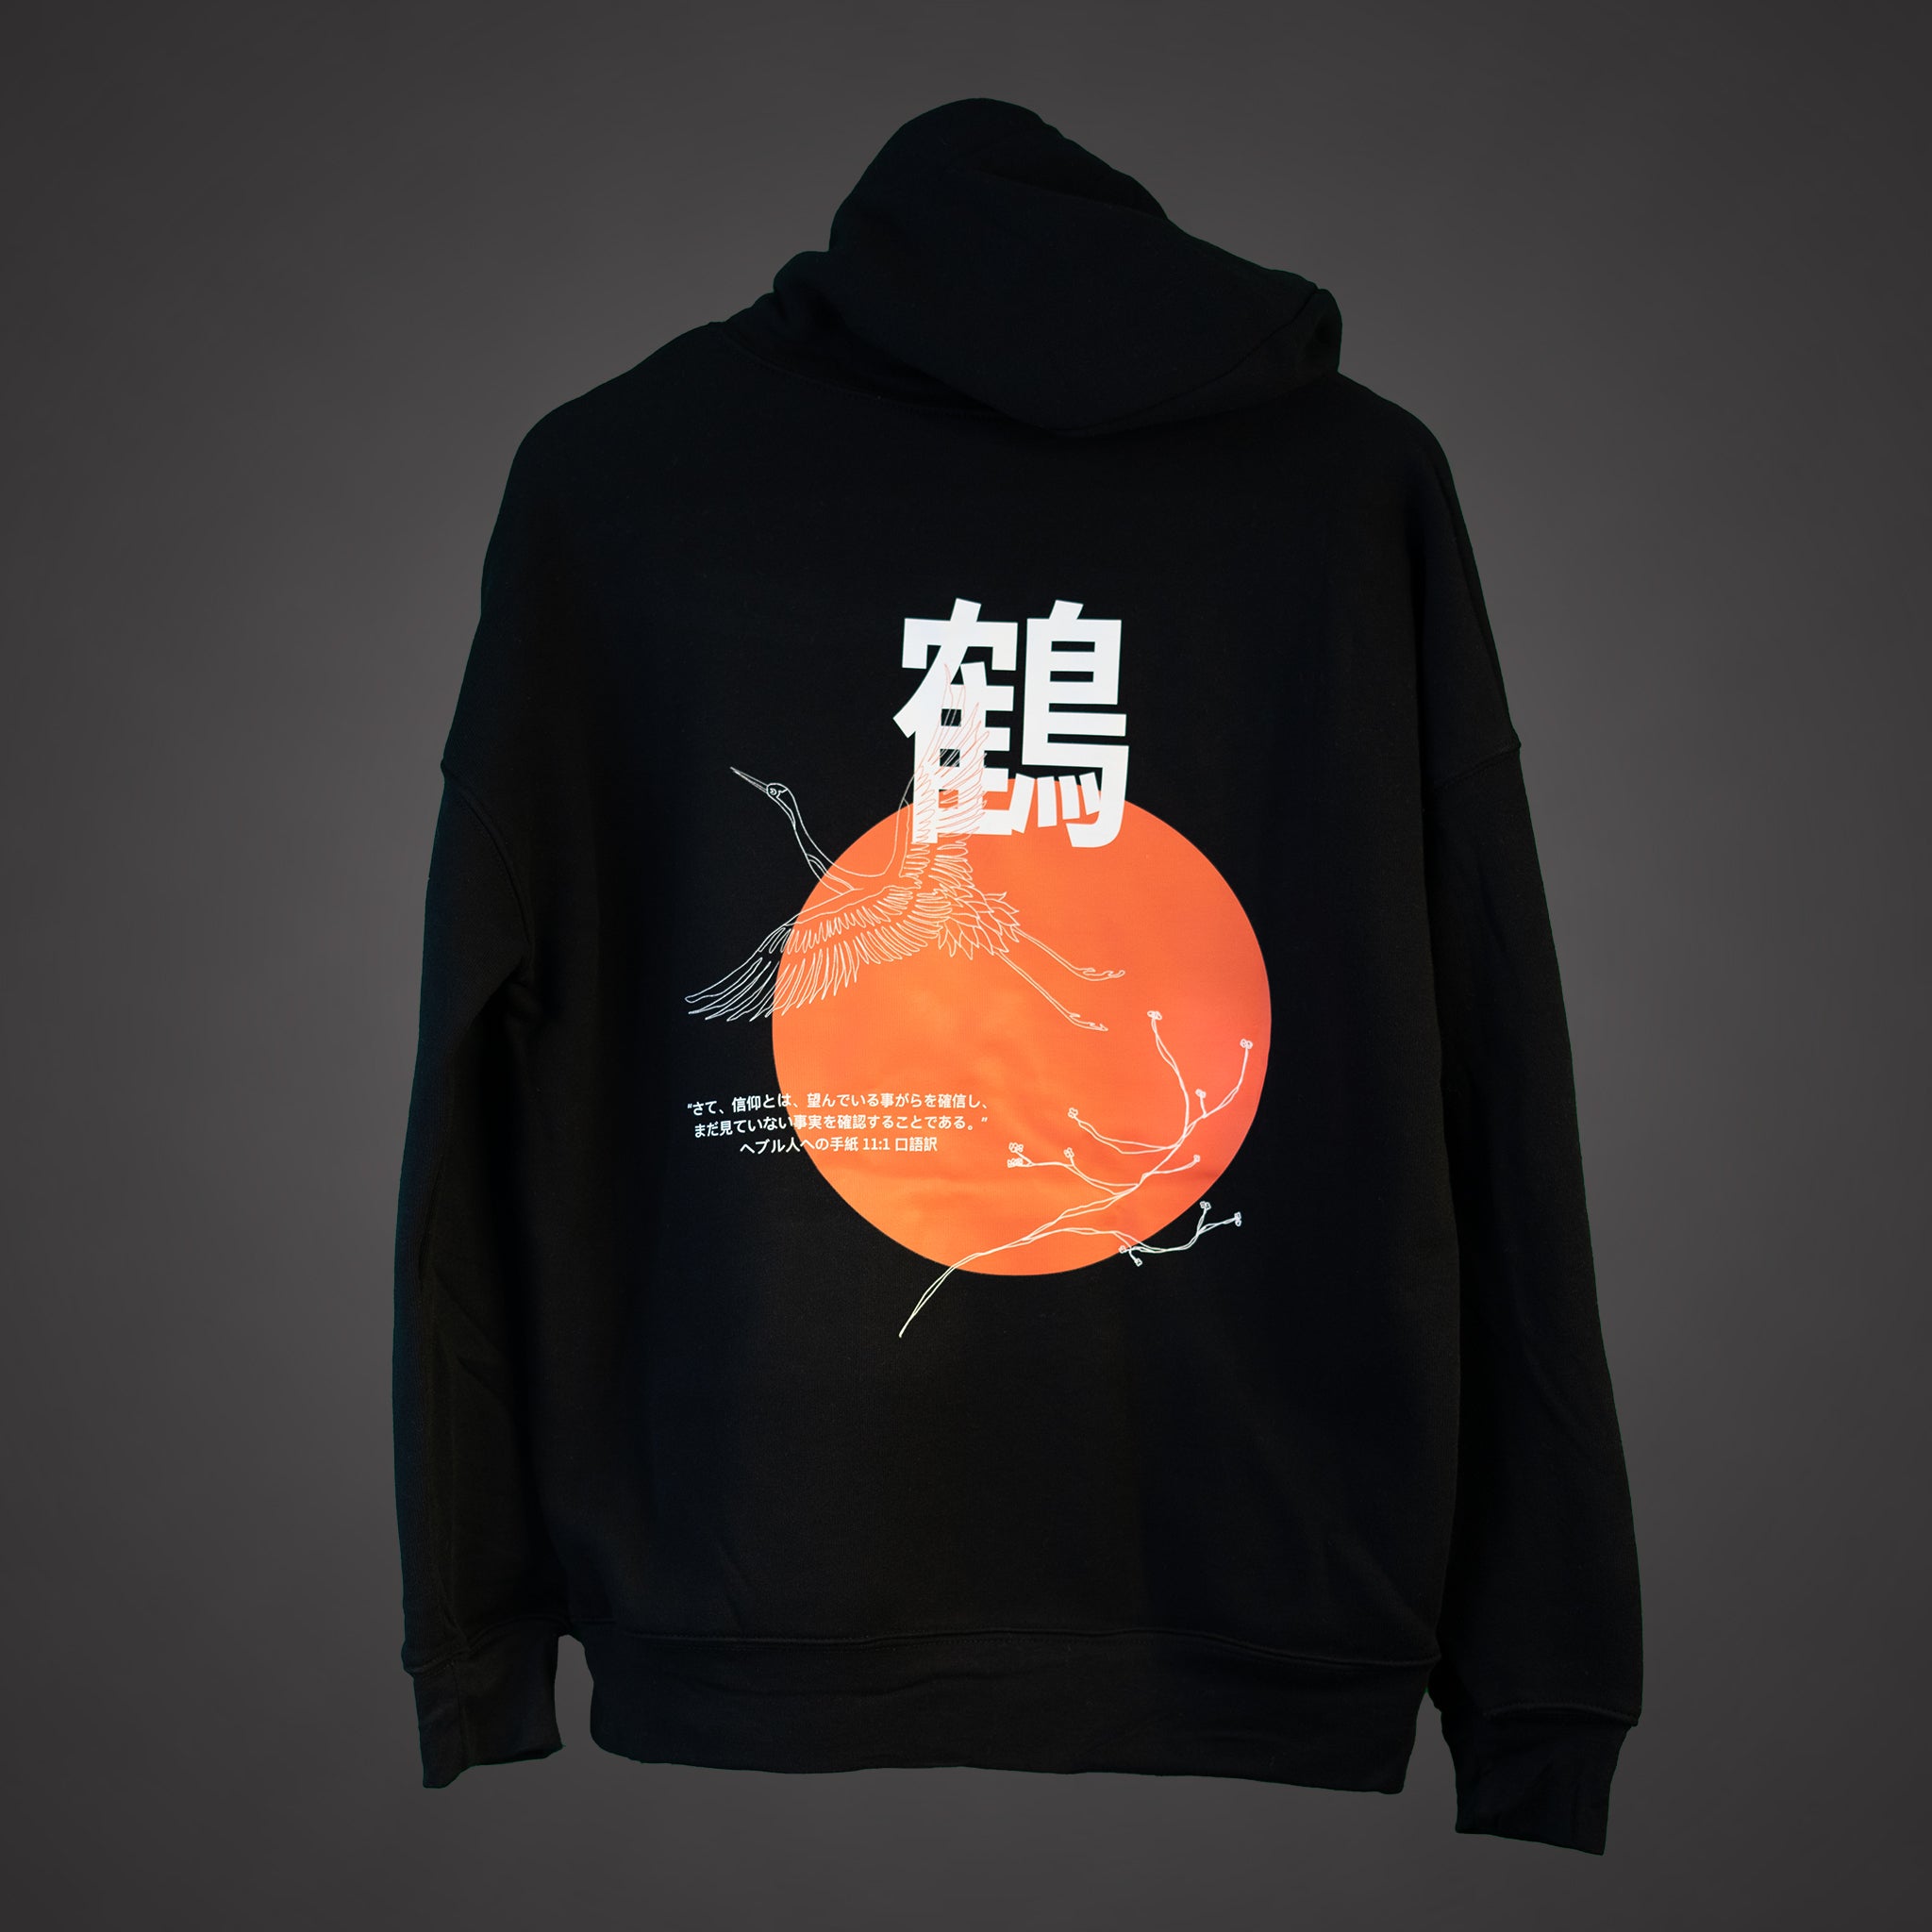 Crane design with Japanese writing on Black hoodie